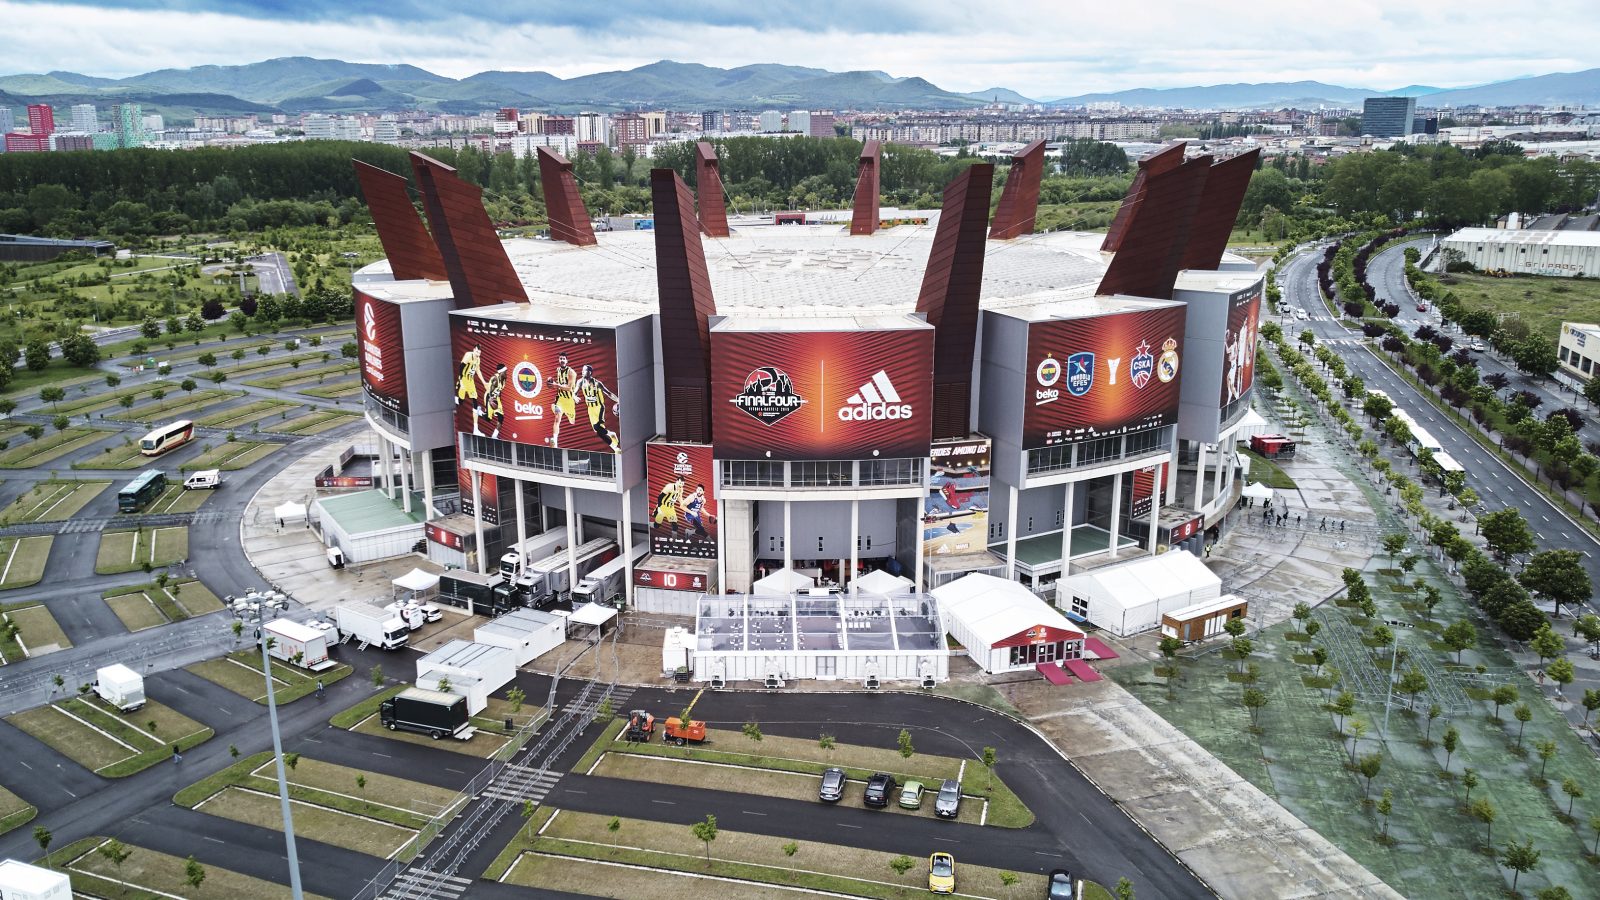 Aerial view of Fernando Buesa Arena during Euroleague Basketball Final Four